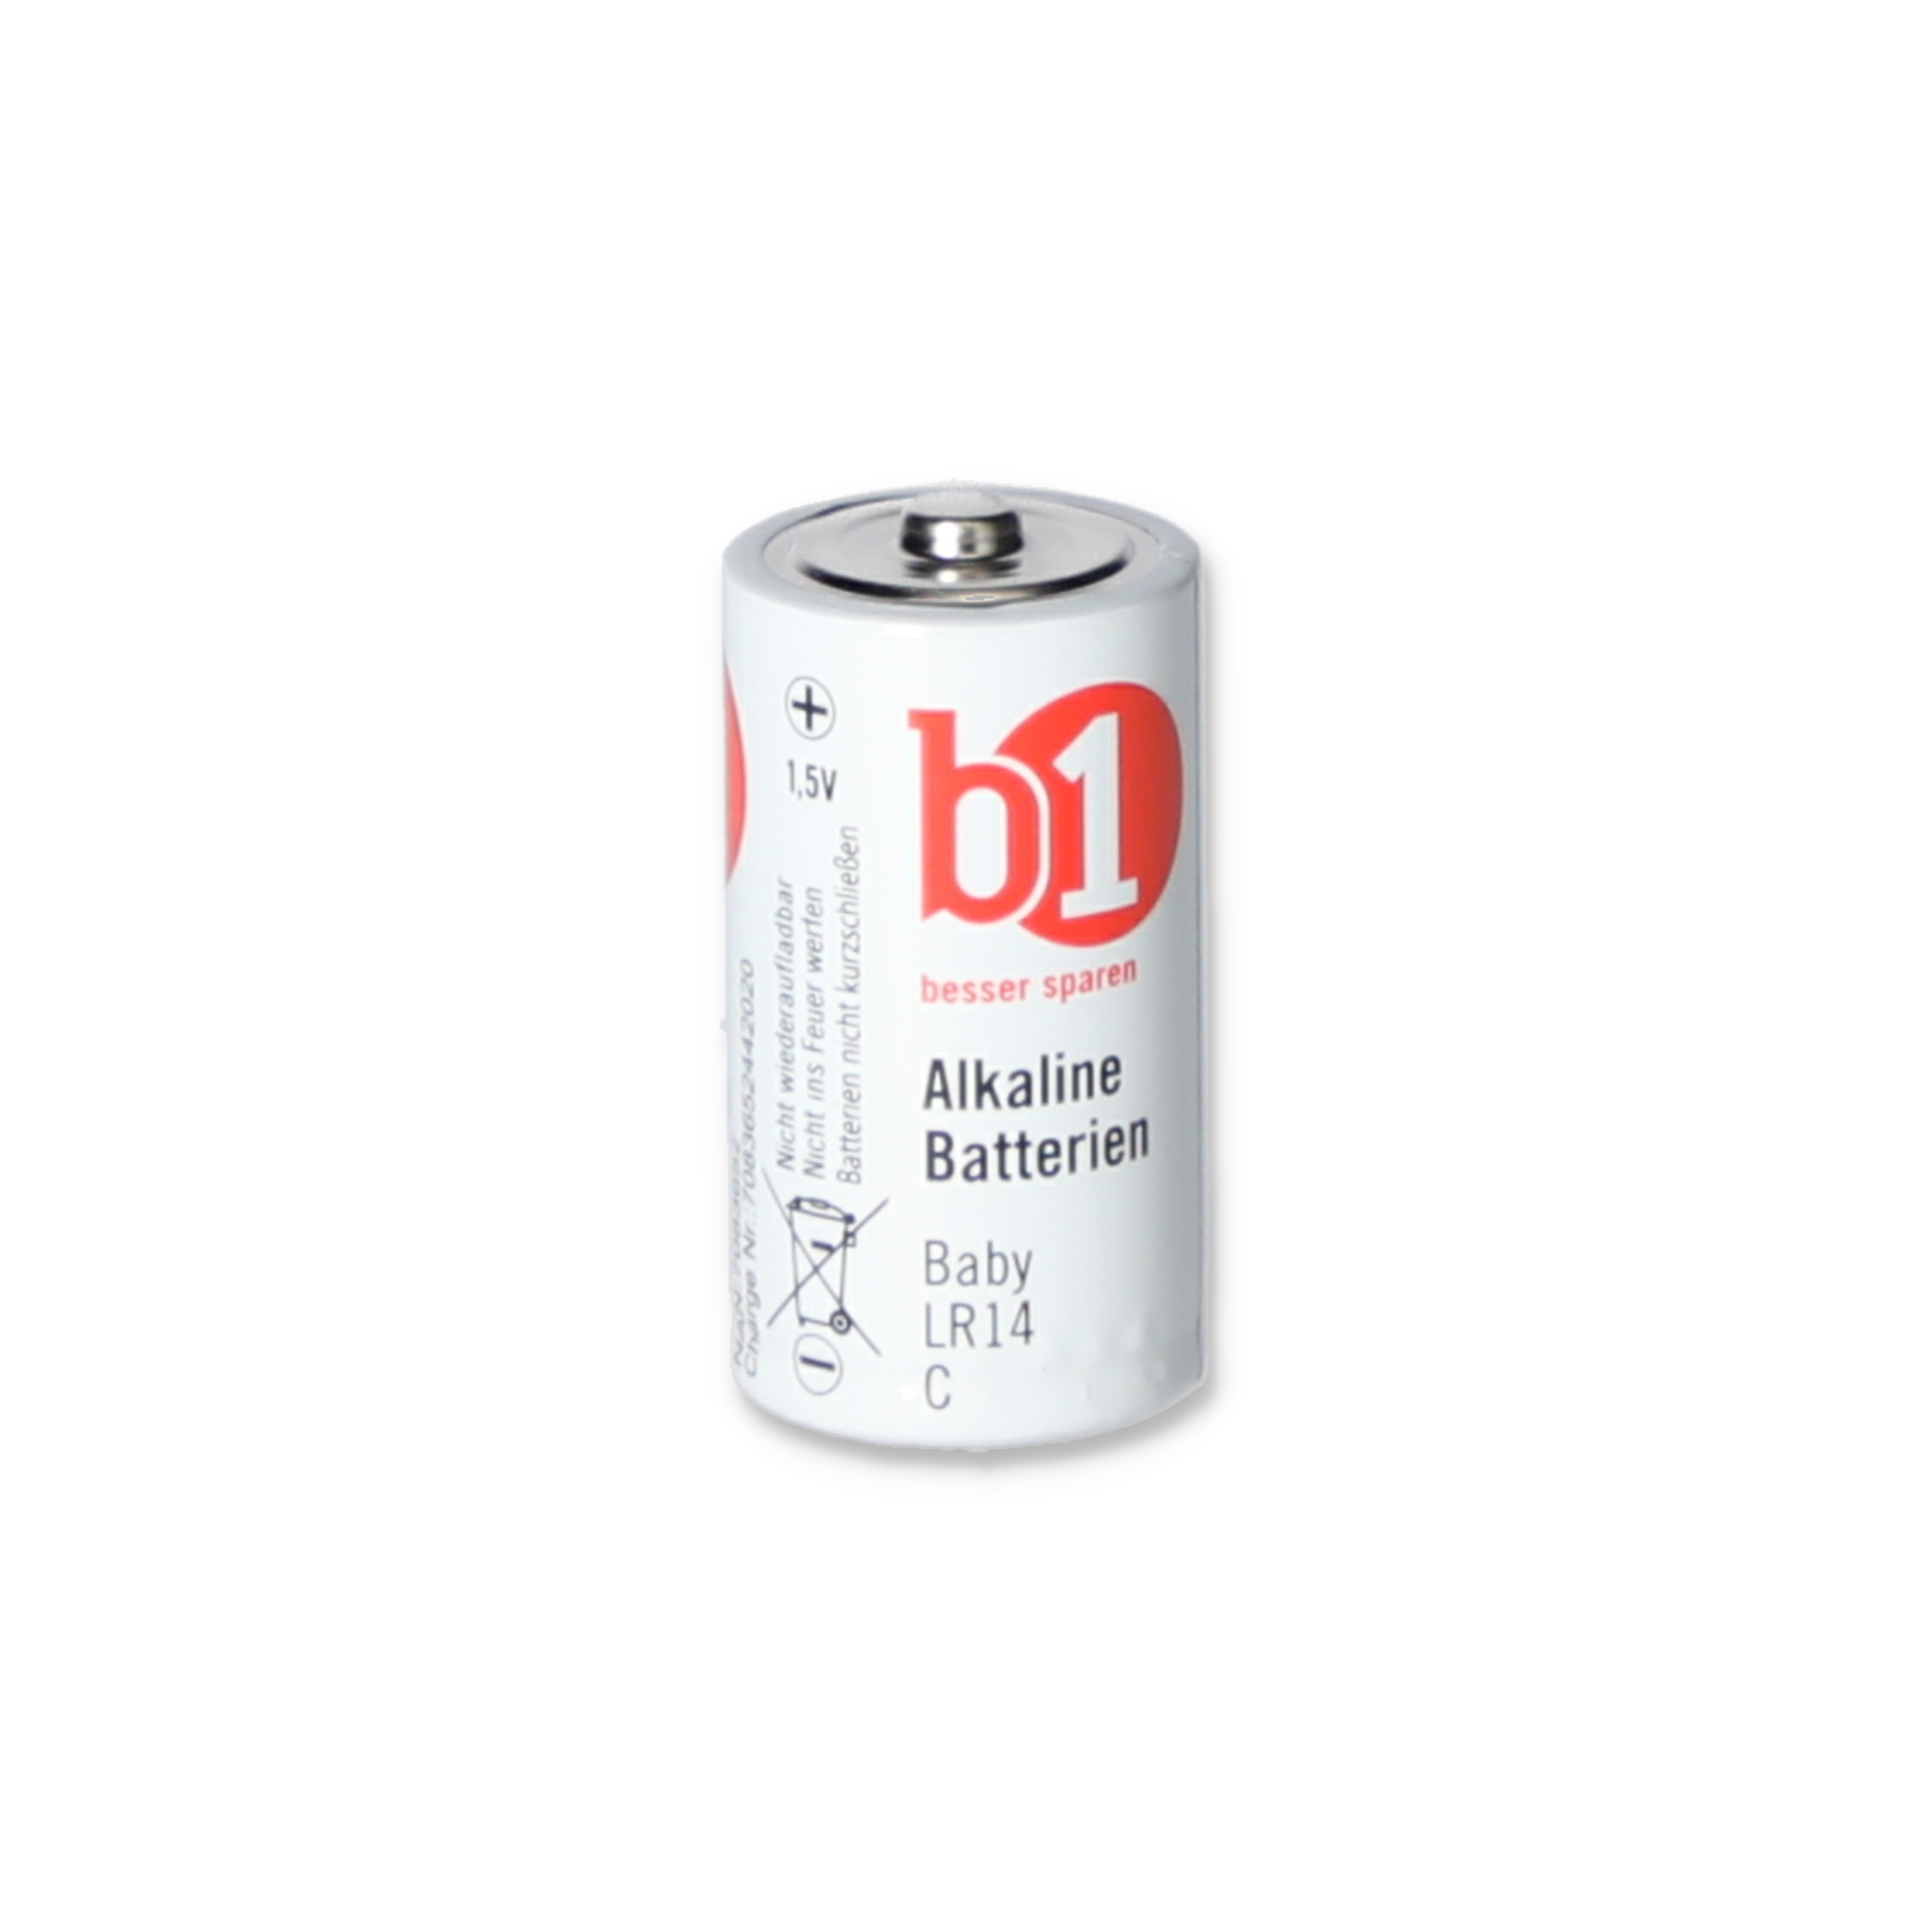 Baby-Batterien LR14 C 1,5 V, 6 Stück + product picture